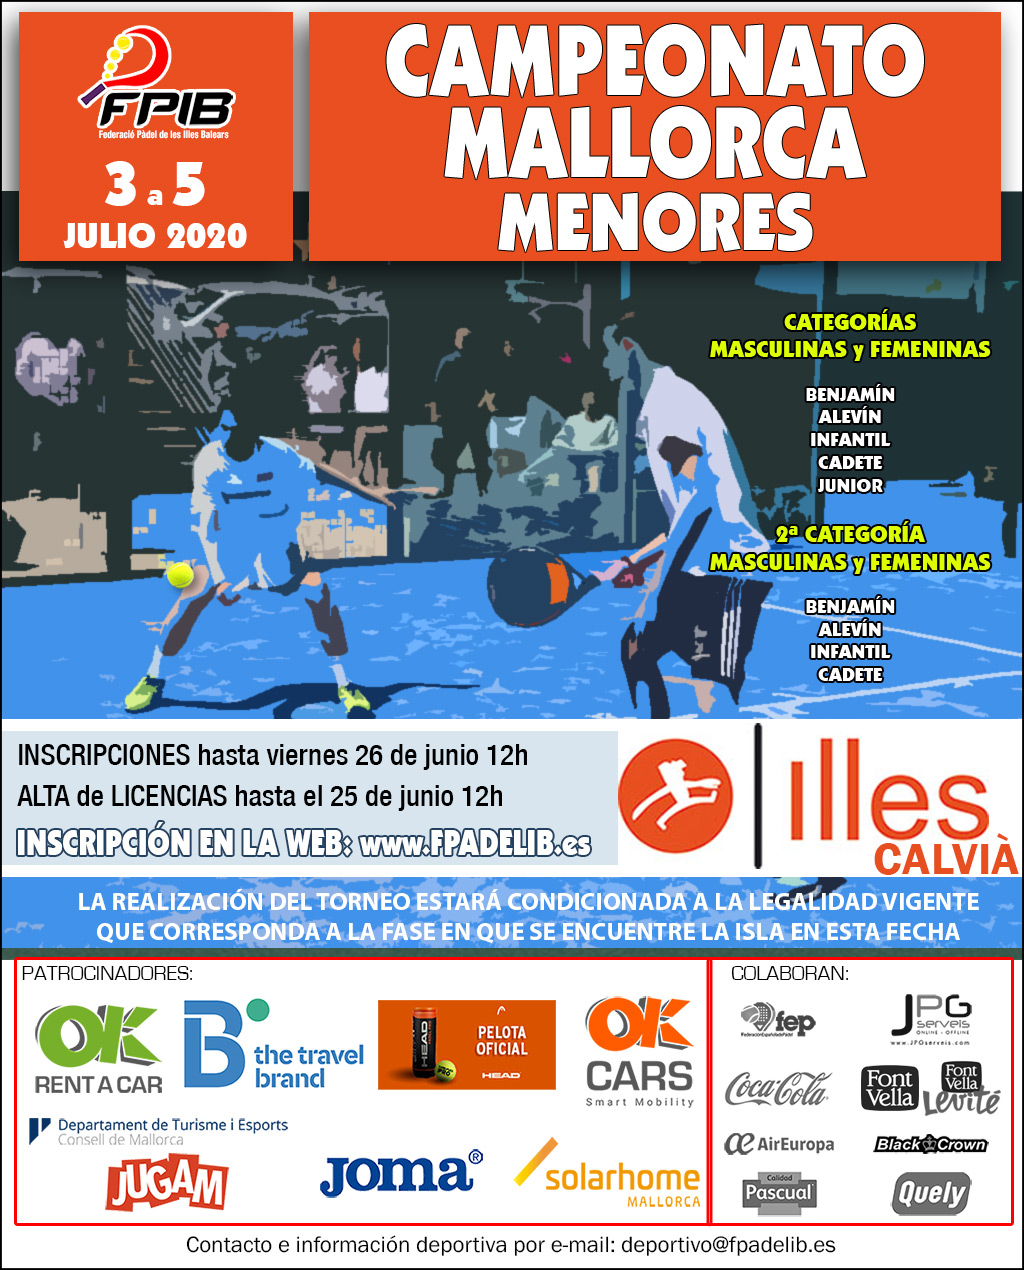 Campeonato de Mallorca de Menores - 2020